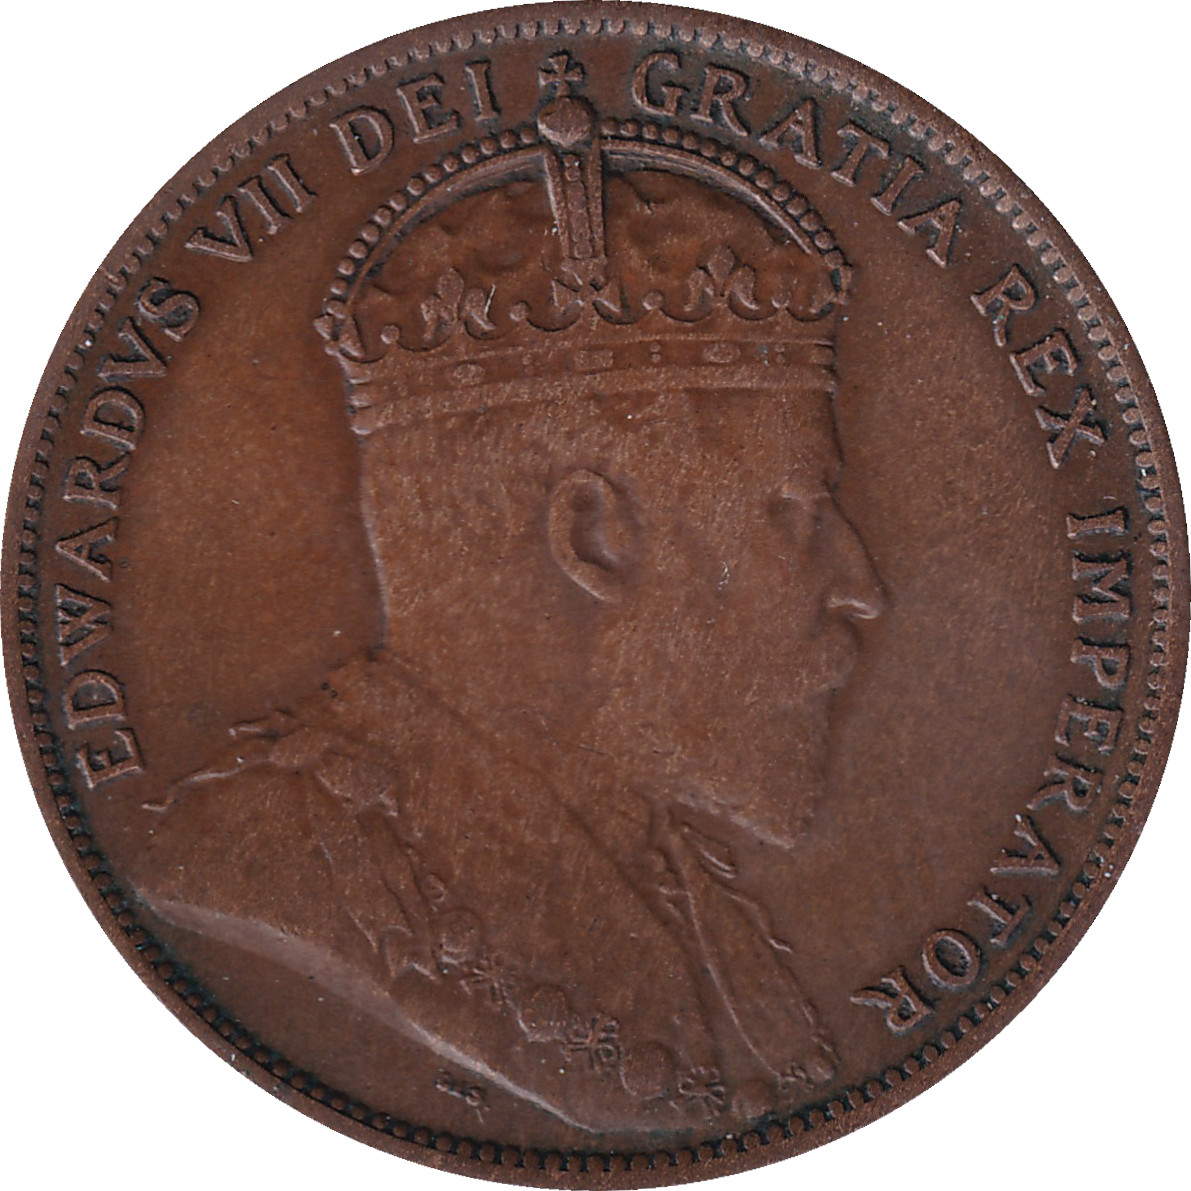 1 cent - Edward VII